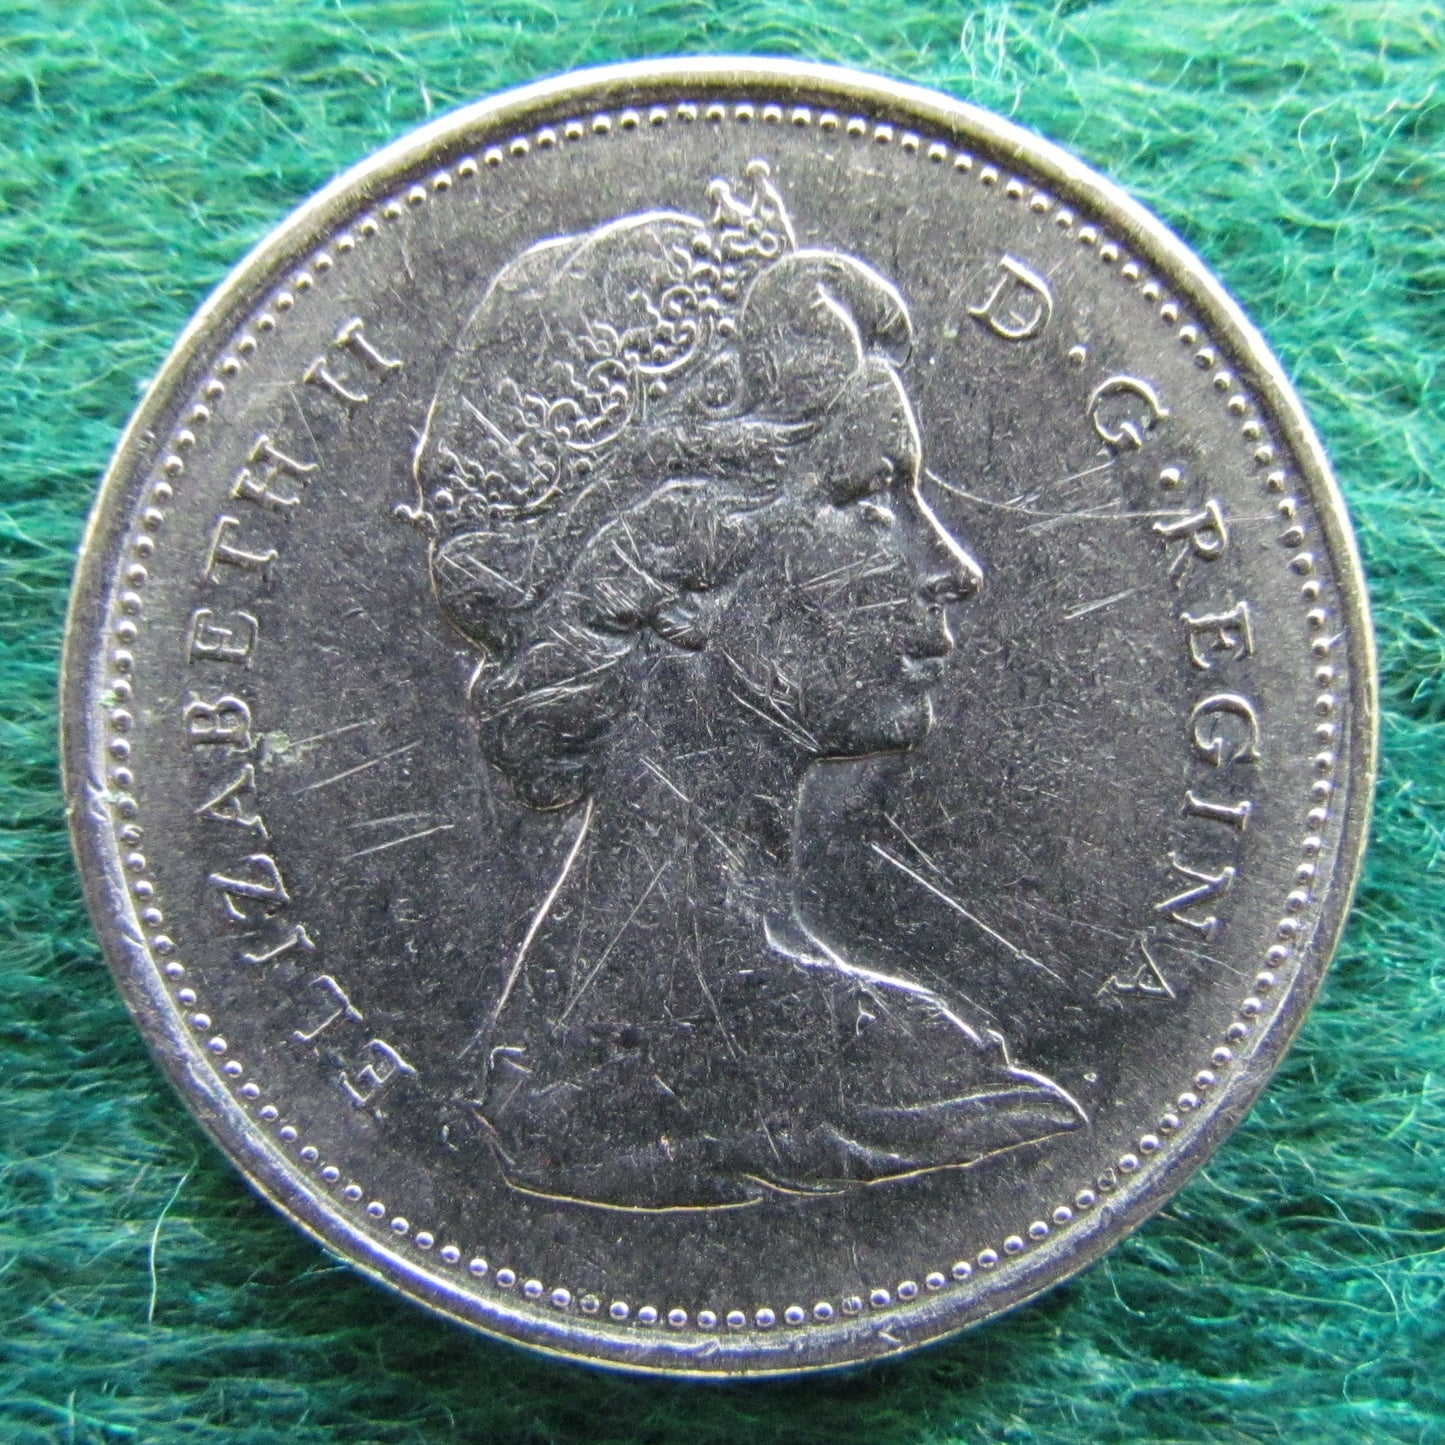 Canada 1971 25 Cent Queen Elizabeth II Coin - Circulated